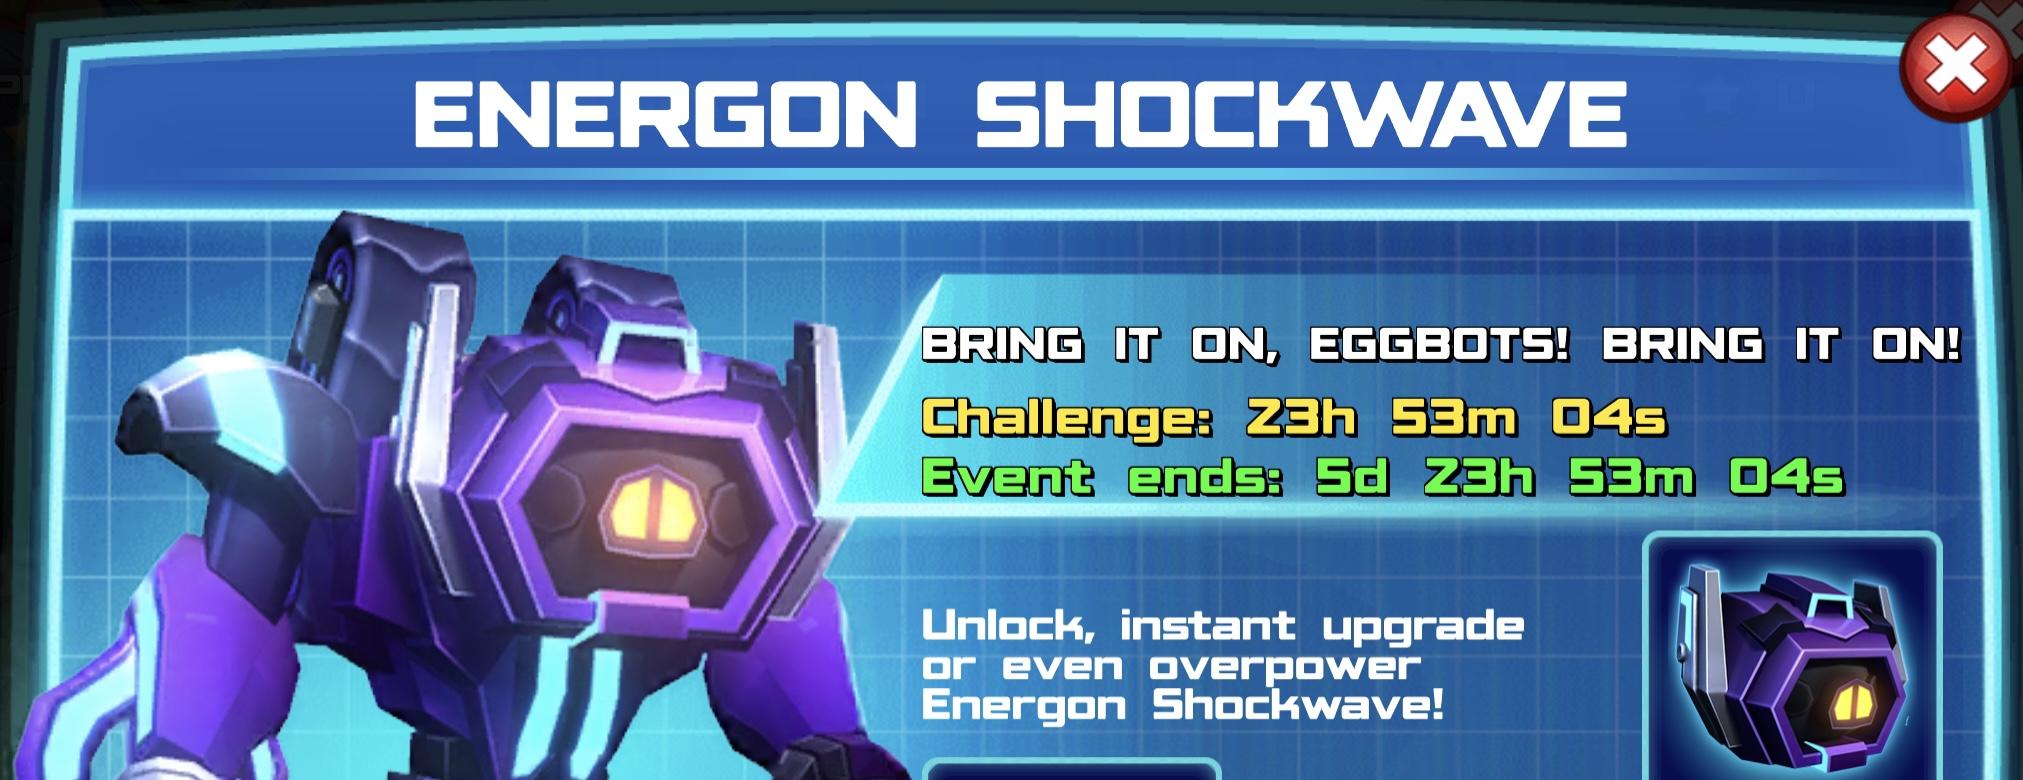 The event banner for Energon Shockwave